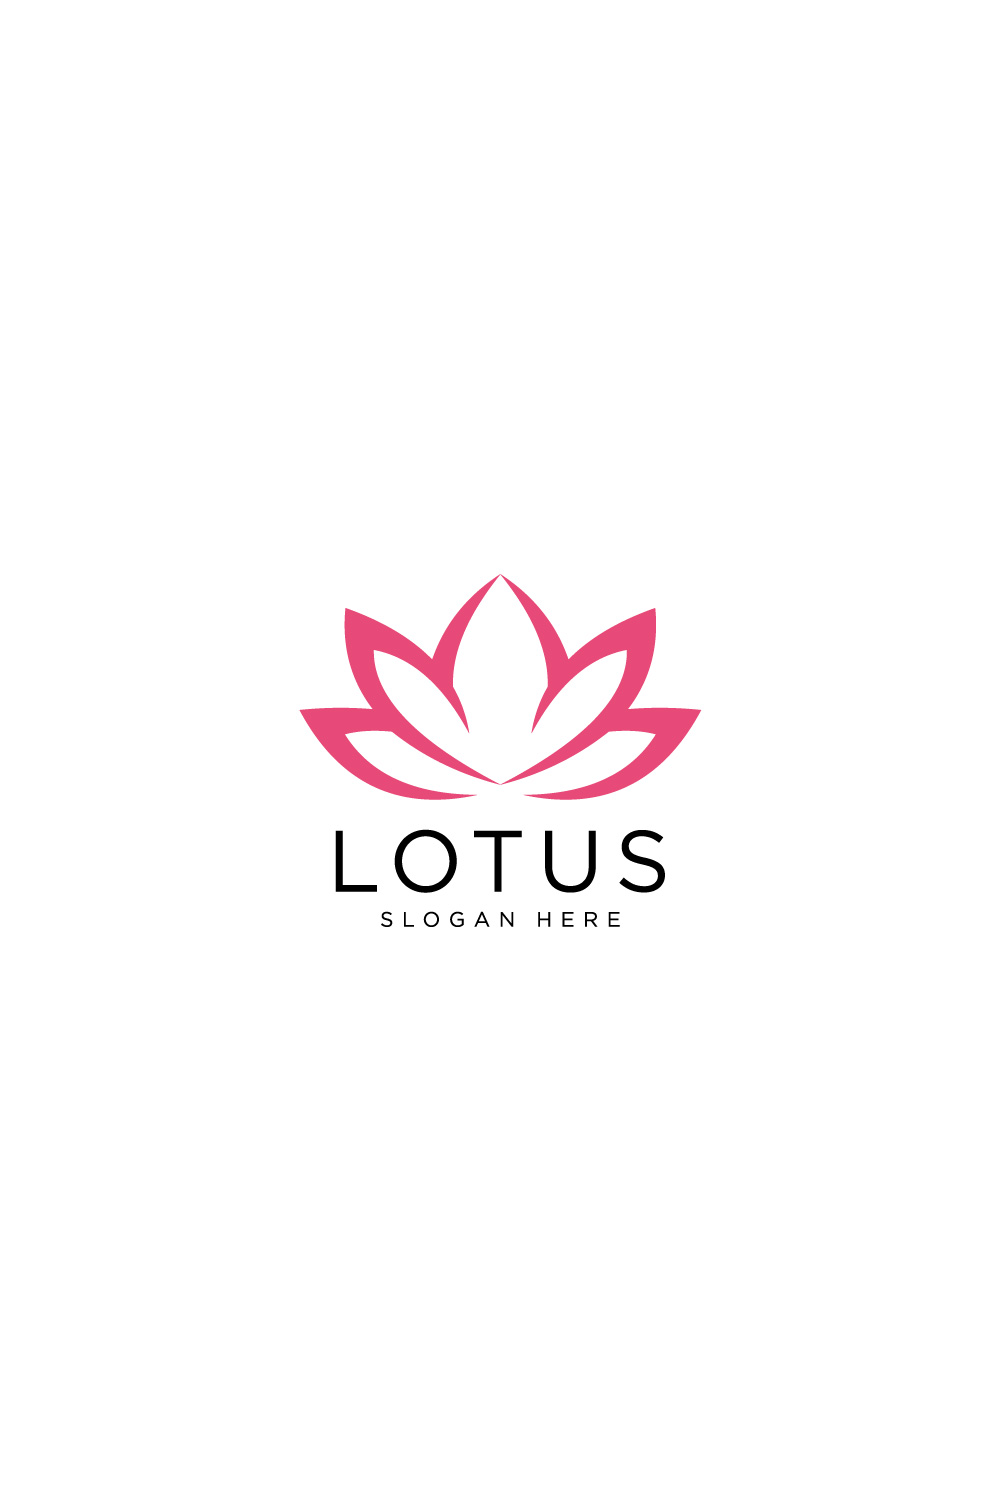 Lotus flower logo vector design pinterest preview image.